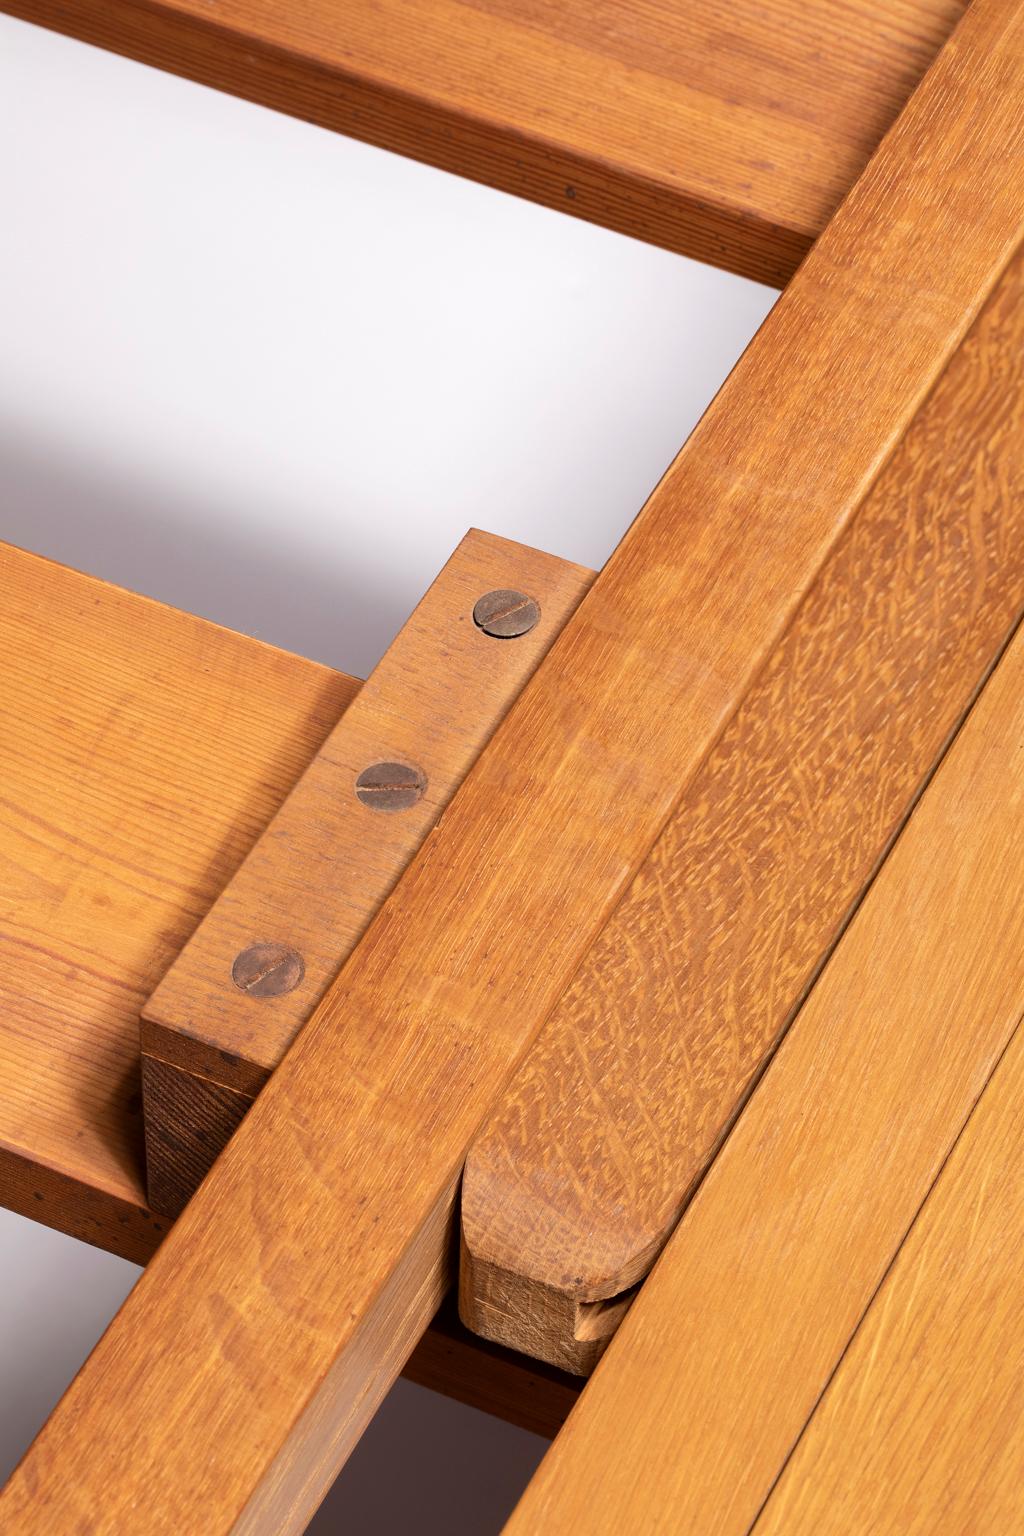 Henrik Worts Erik Worts Danish Mid-Century Modern Mahogany Table & Chairs For Sale 10